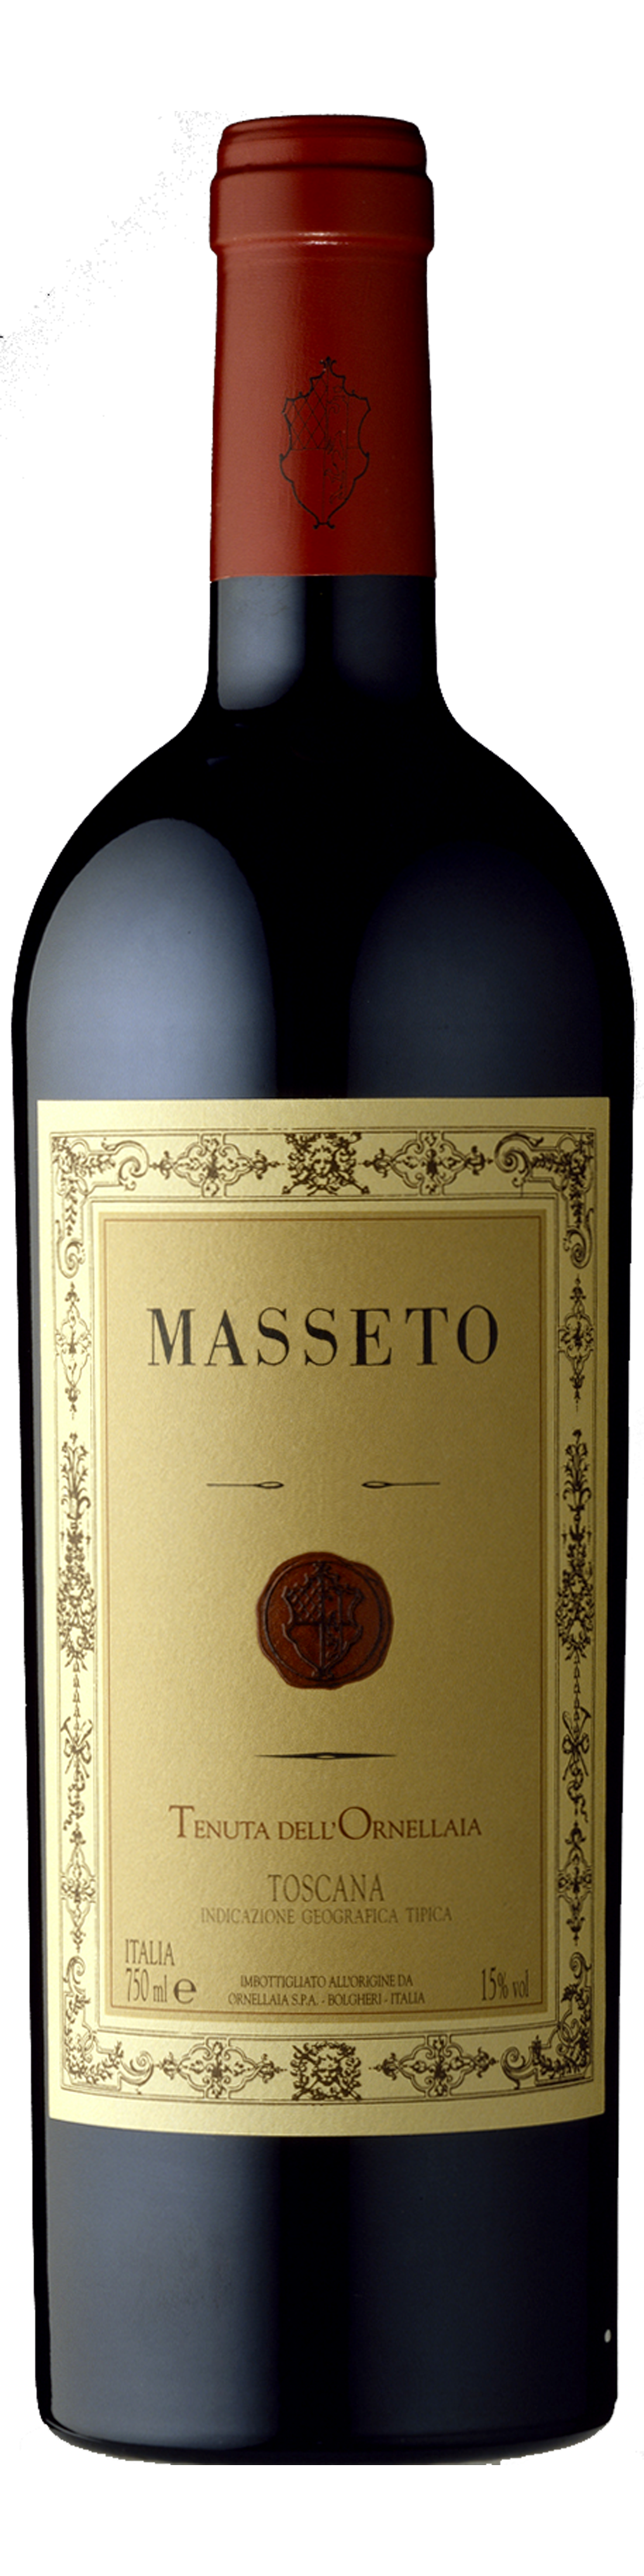 Bottle shot of 1999 Masseto